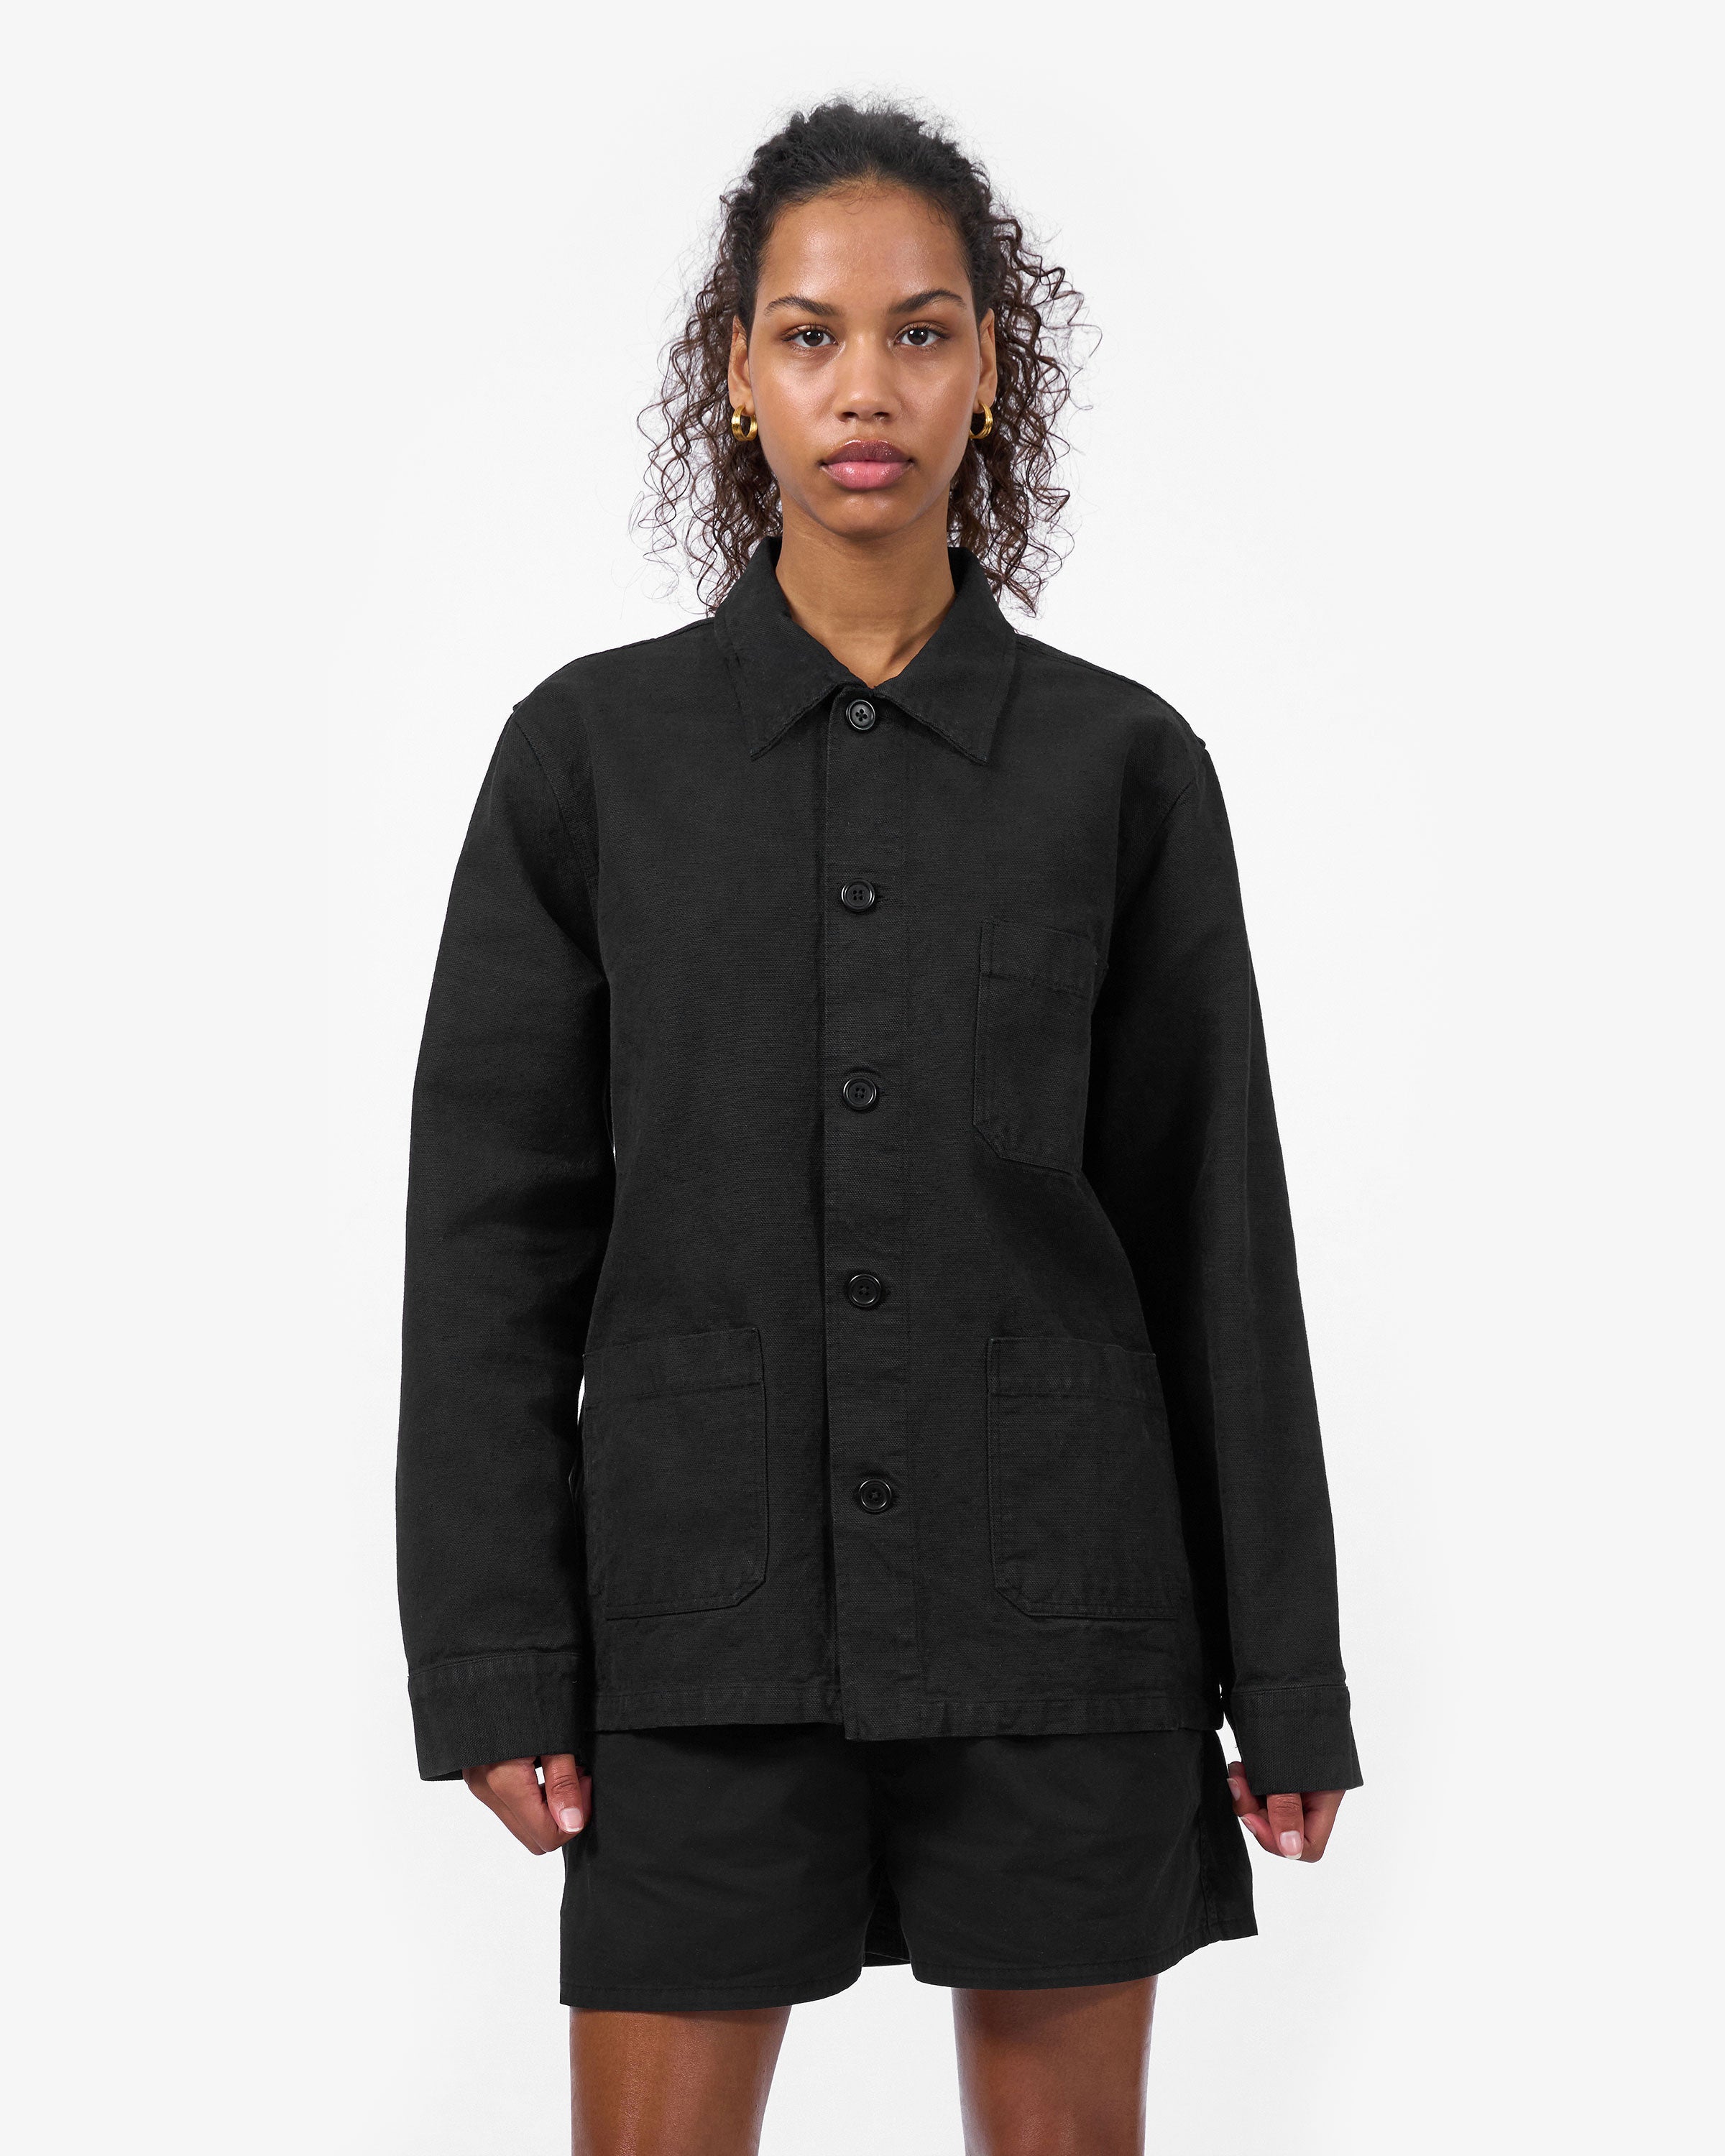 Organic Workwear Jacket - Cedar Brown